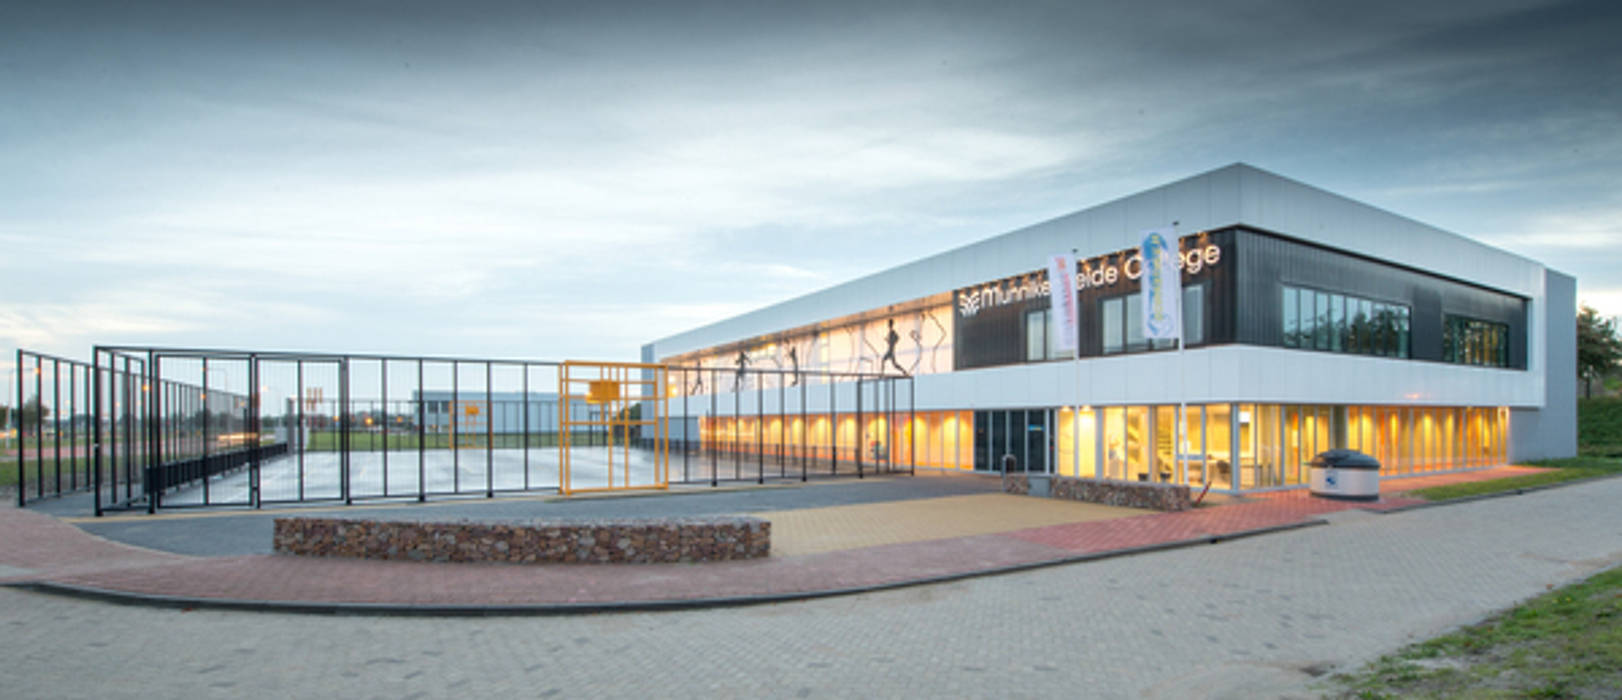 Sporthal Munnikenheide College, Etten-Leur, Liag Architecten en Bouwadviseurs: modern door Liag Architecten en Bouwadviseurs, Modern